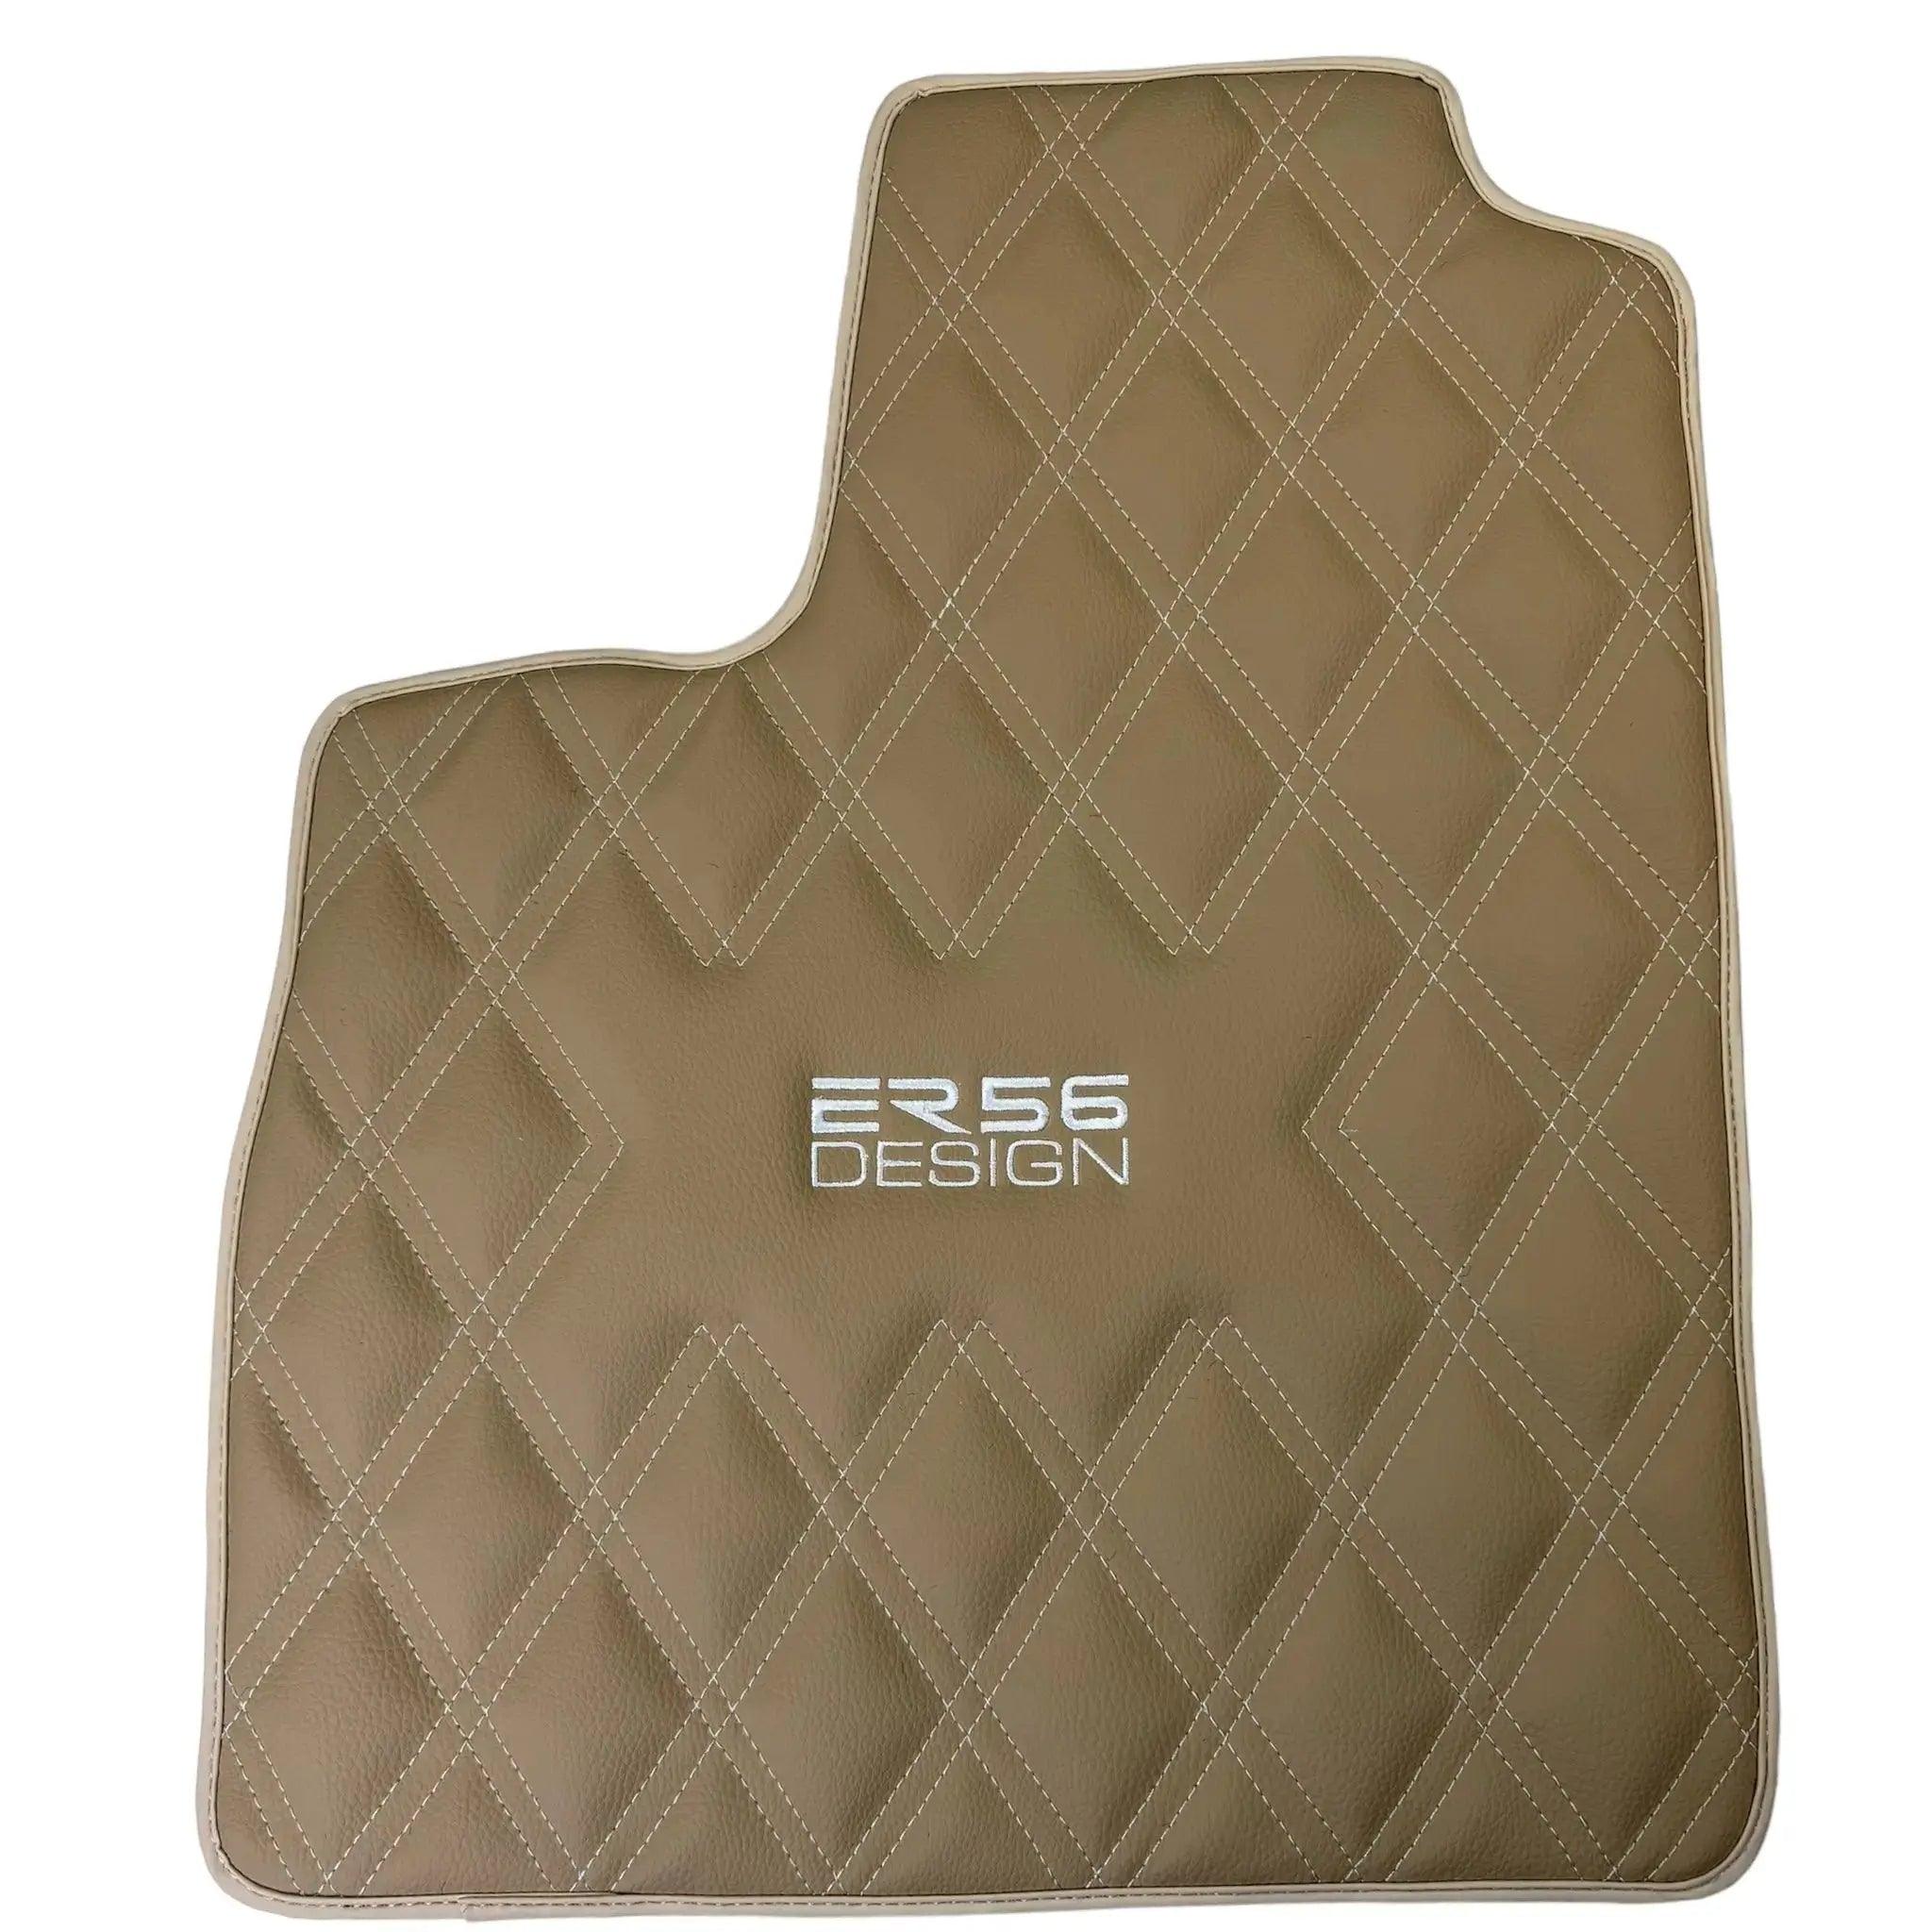 Beige Floor Mats for Bentley Continental GTC (2006–2011) with Leather | ER56 Design - AutoWin